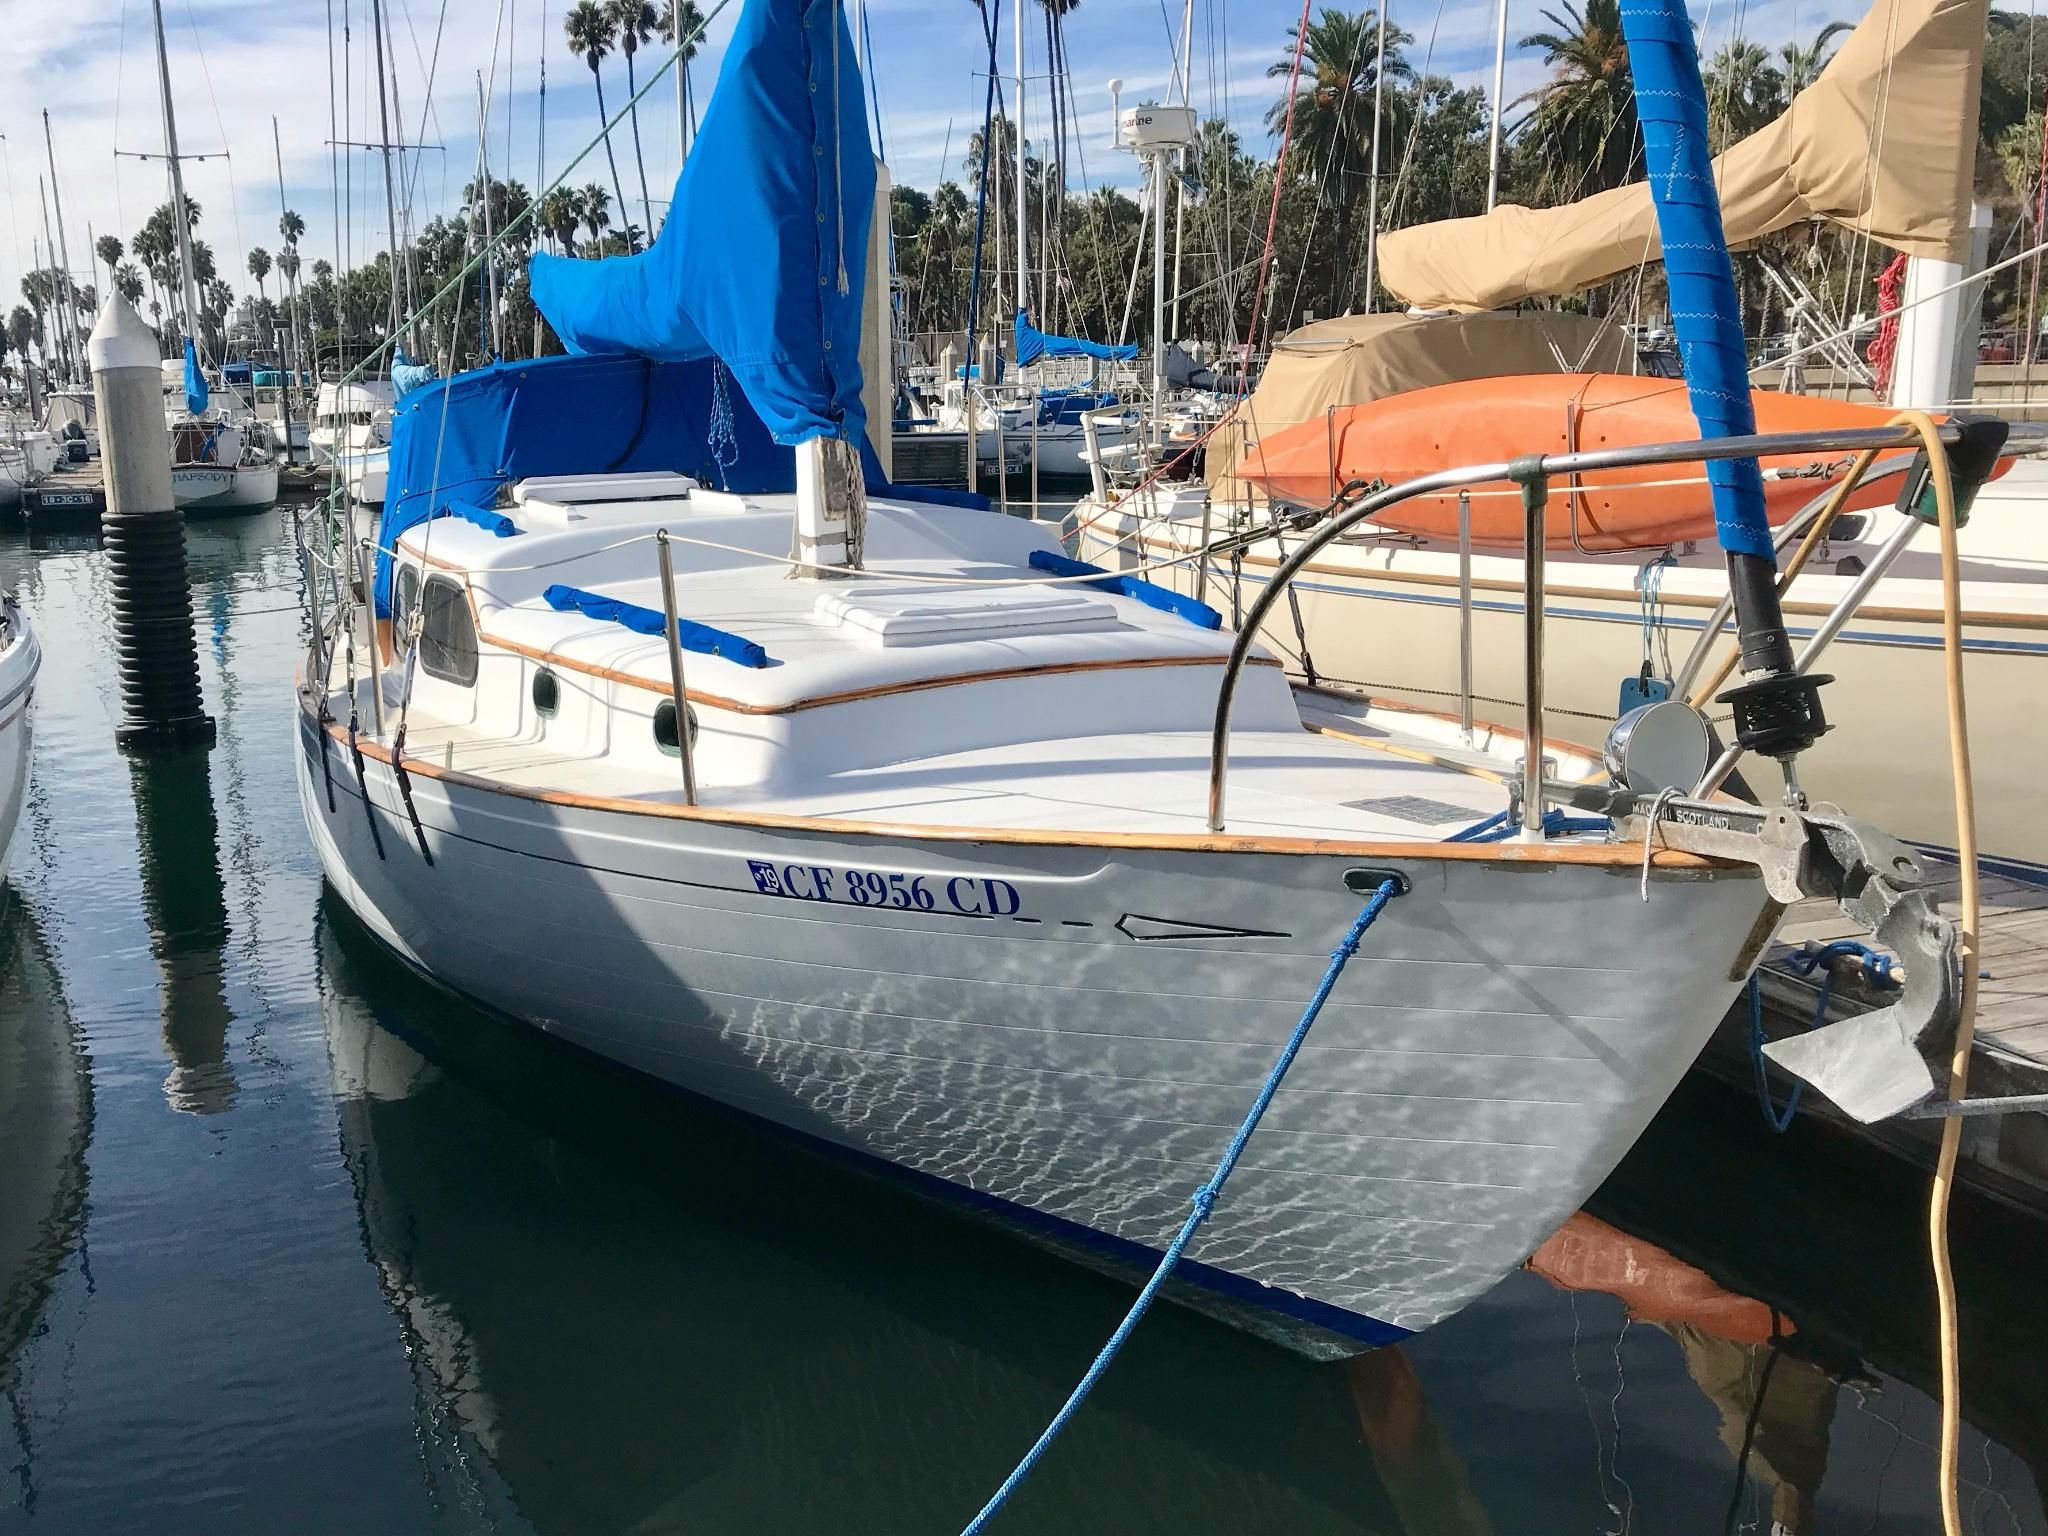 32 ft islander sailboat